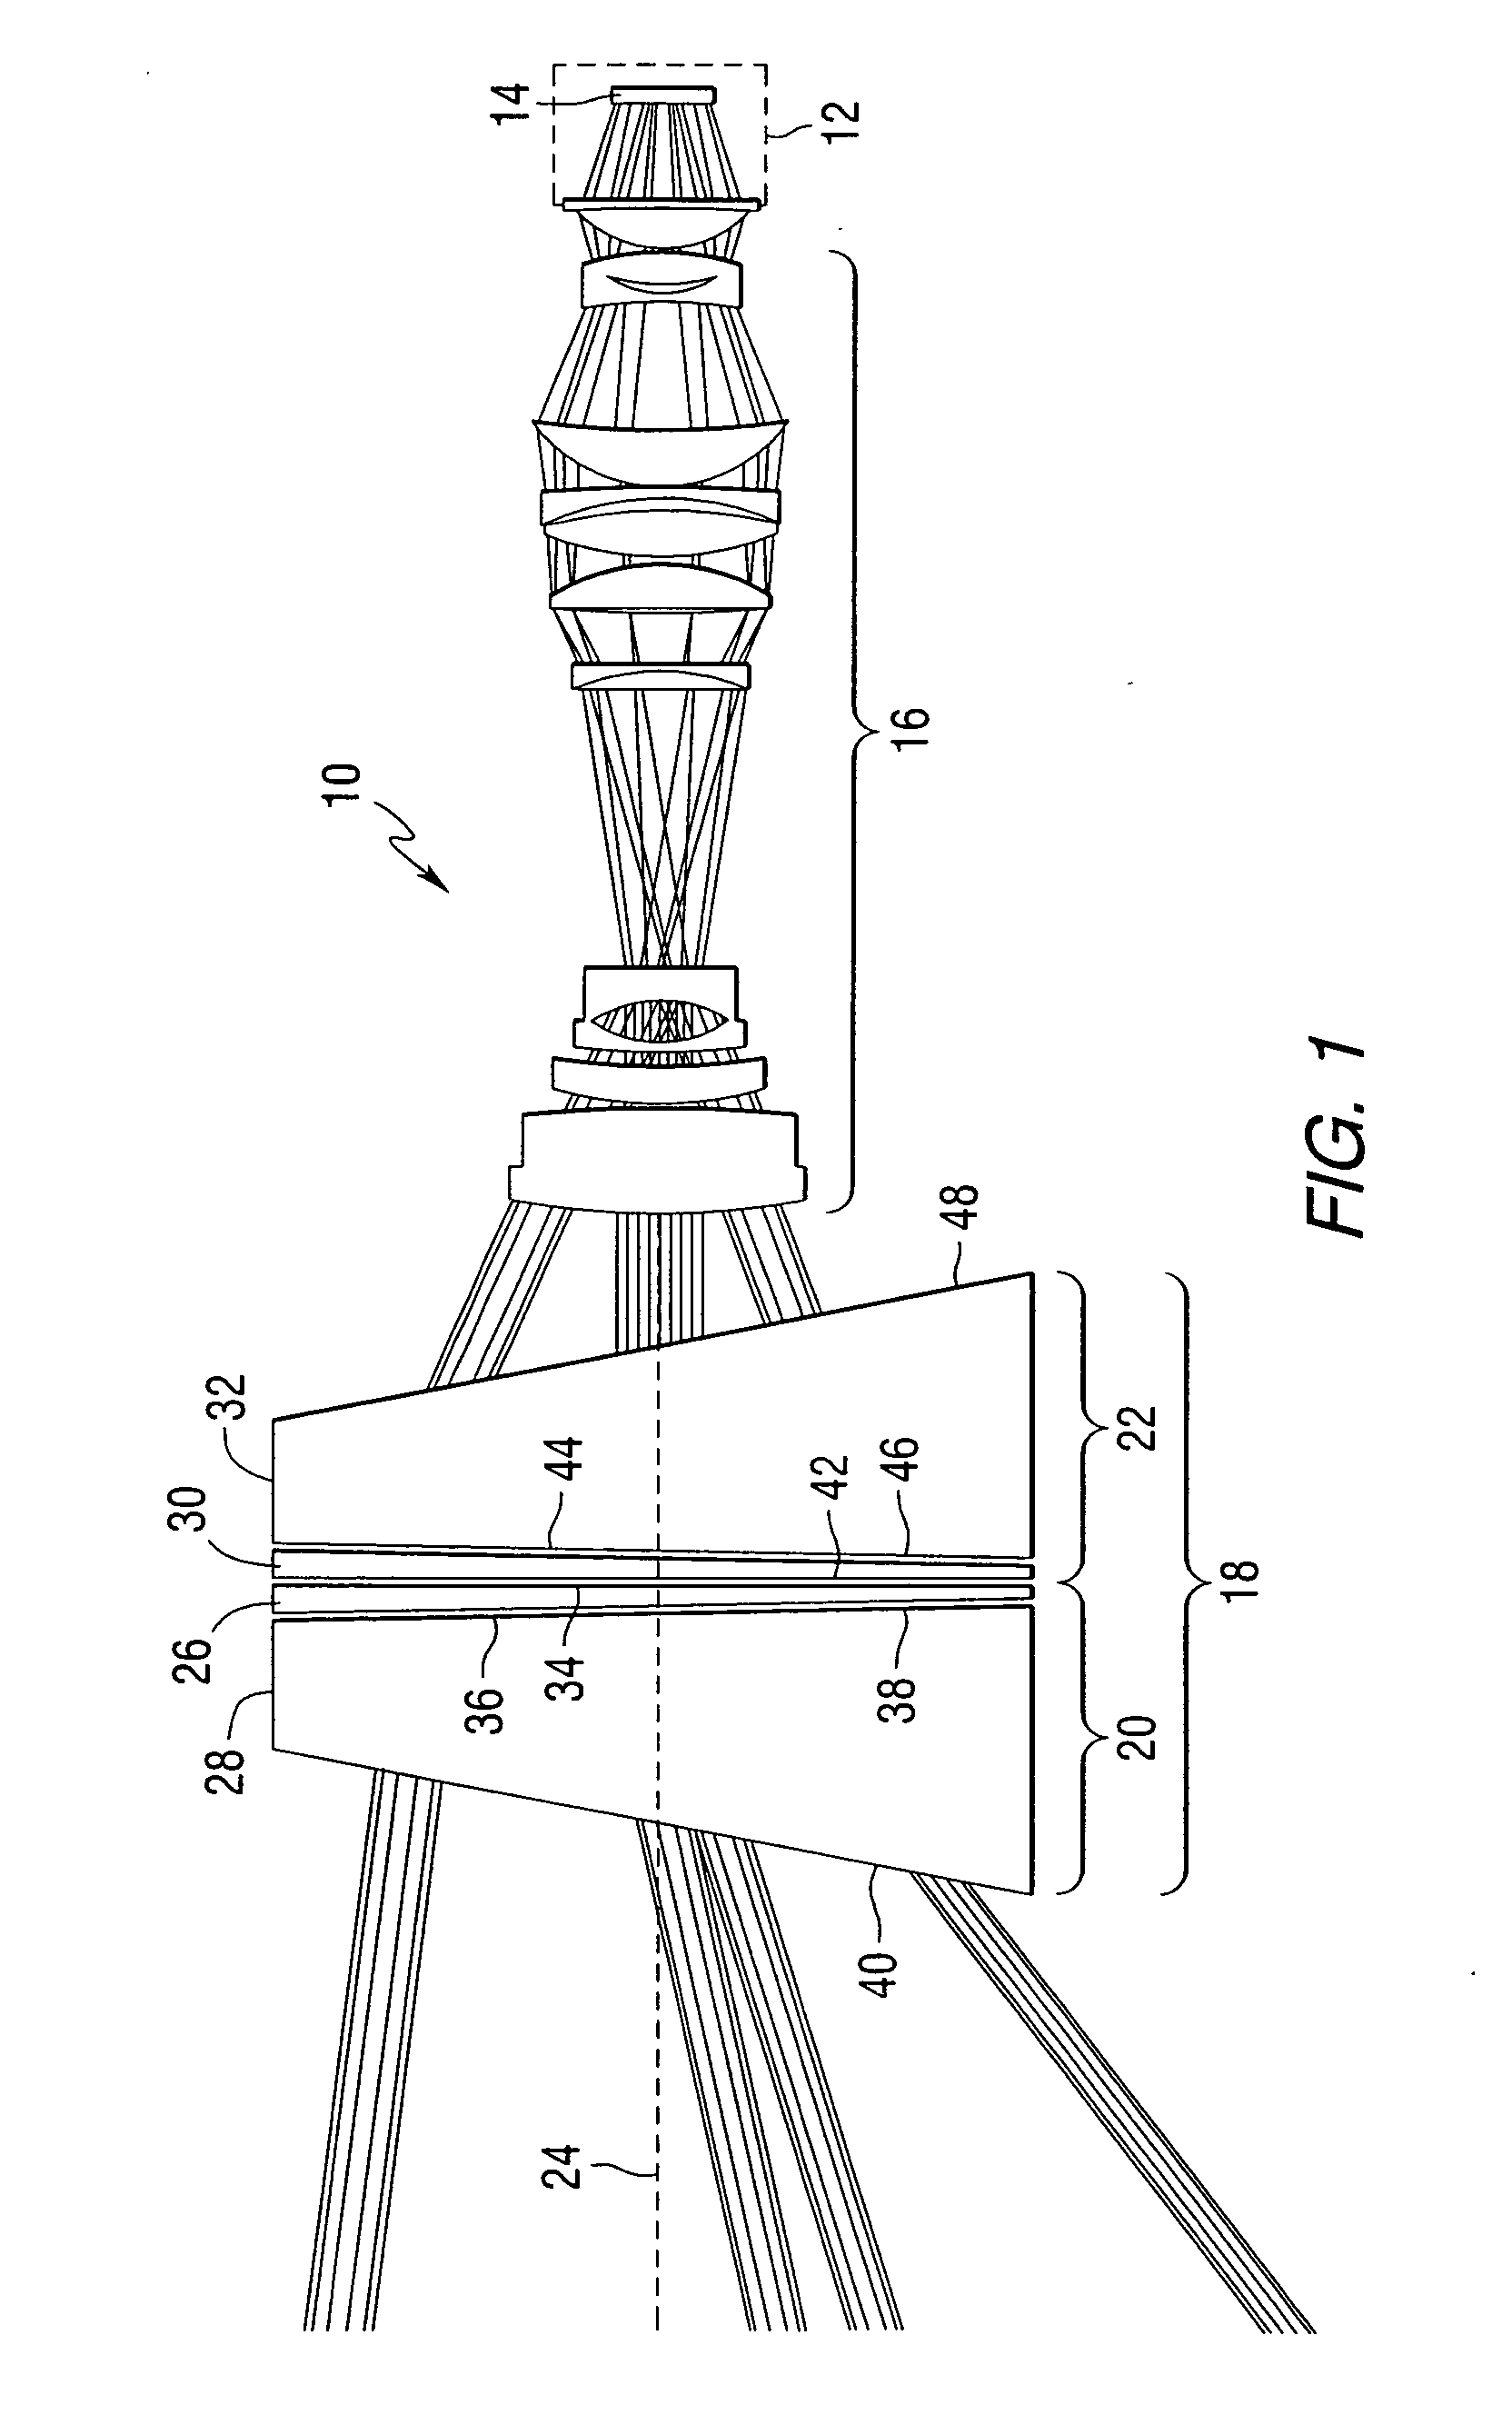 Pan and tilt apparatus using achromatic prisms